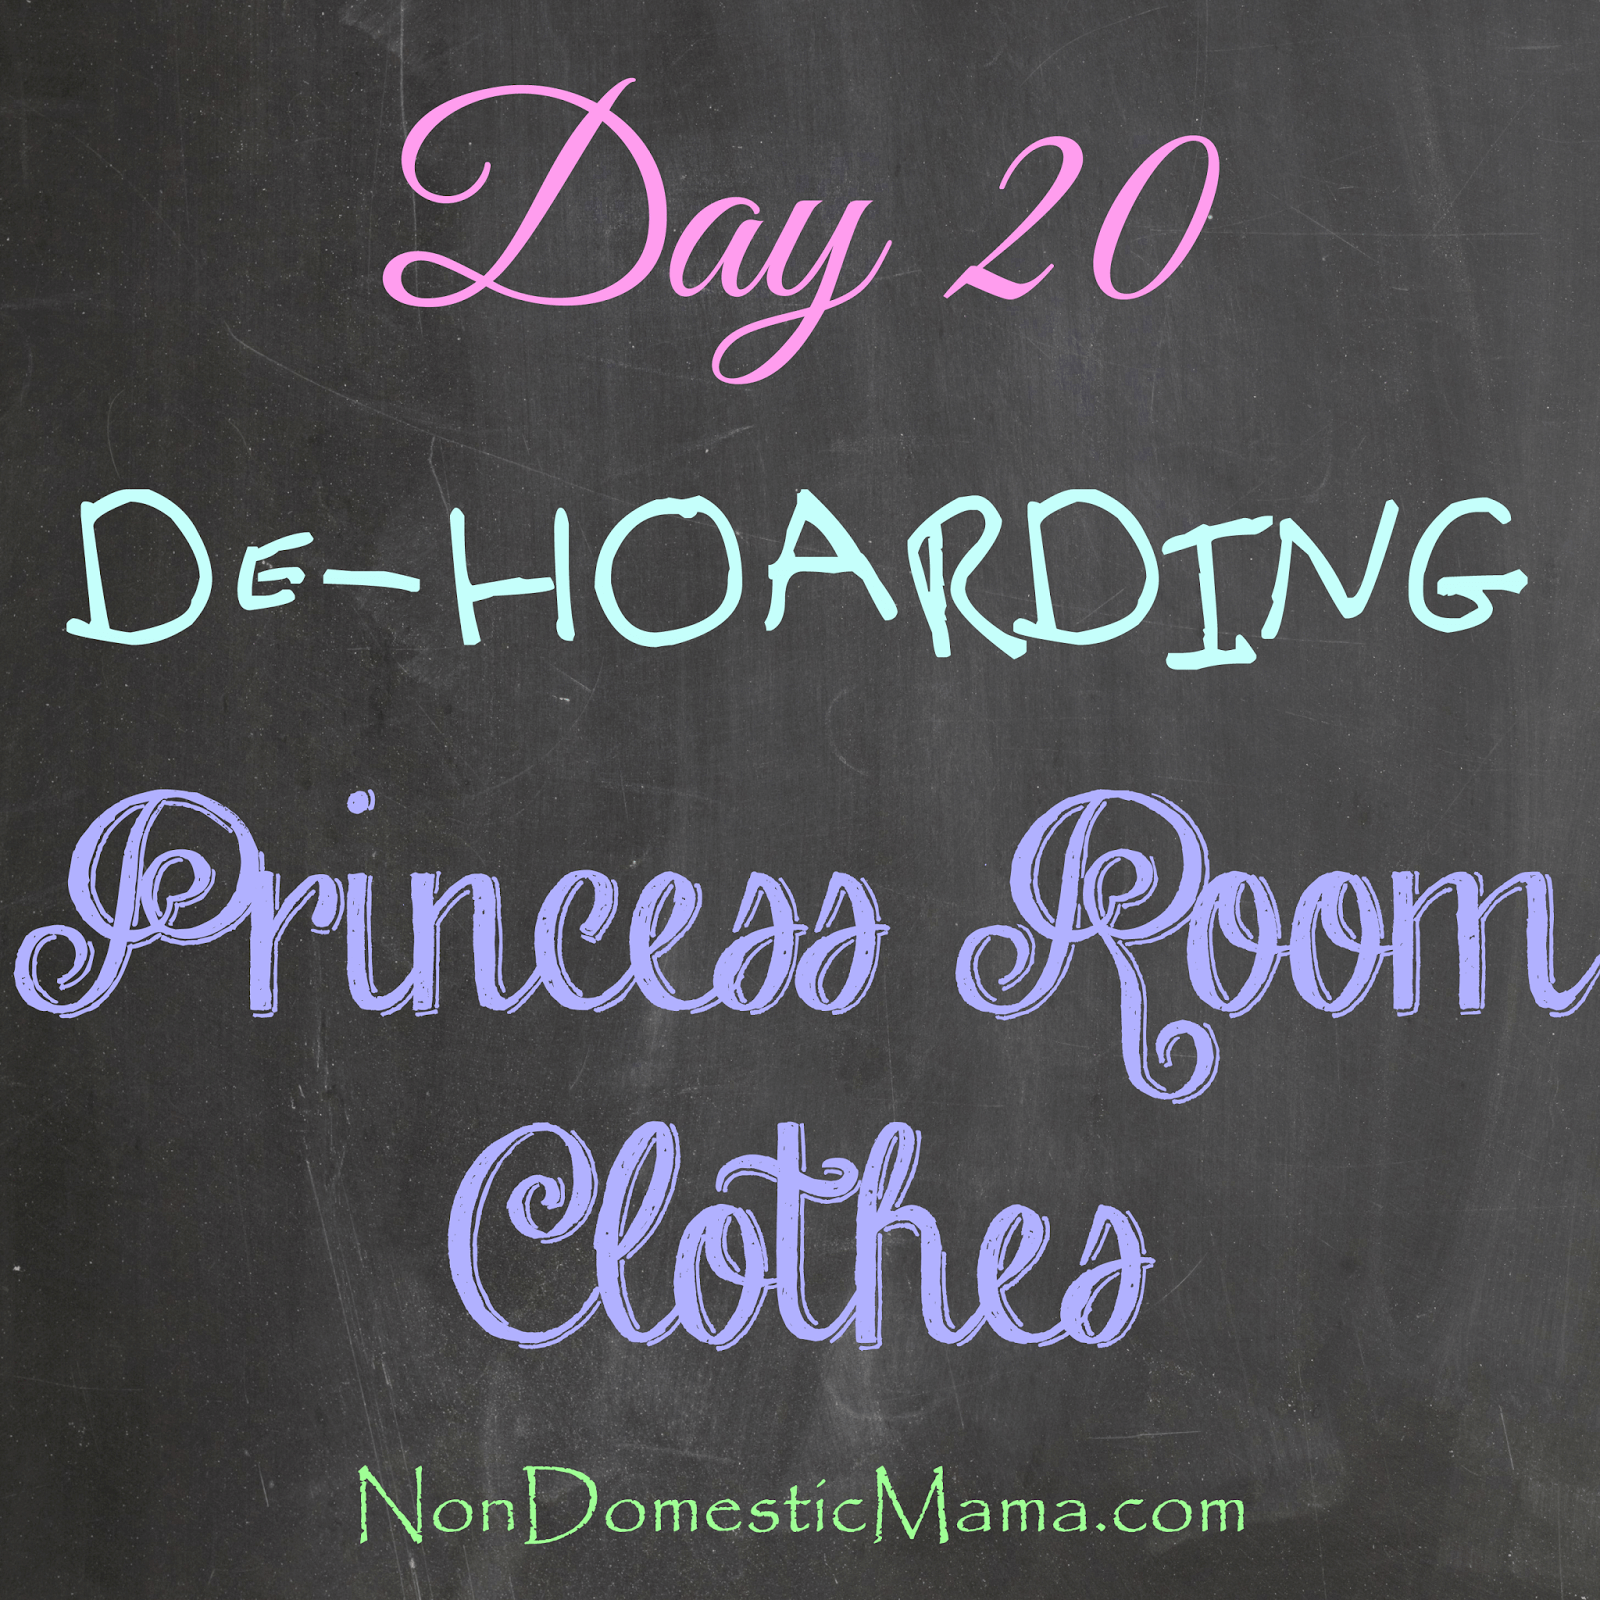 {Day 20} Princess Clothes - 31 Days of De-Hoarding #write31days #dehoarding